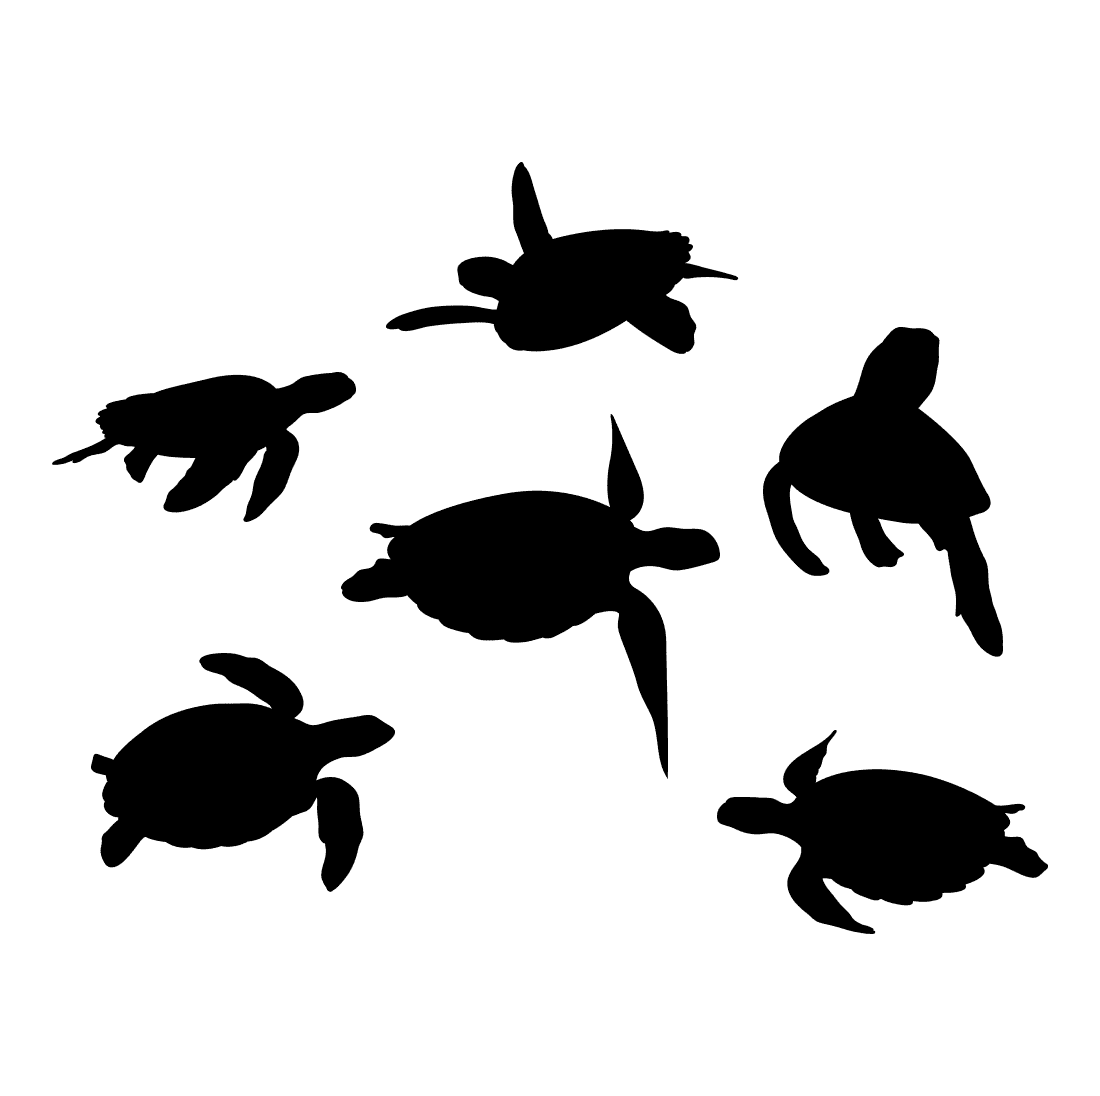 Group of sea turtles swimming in the ocean.